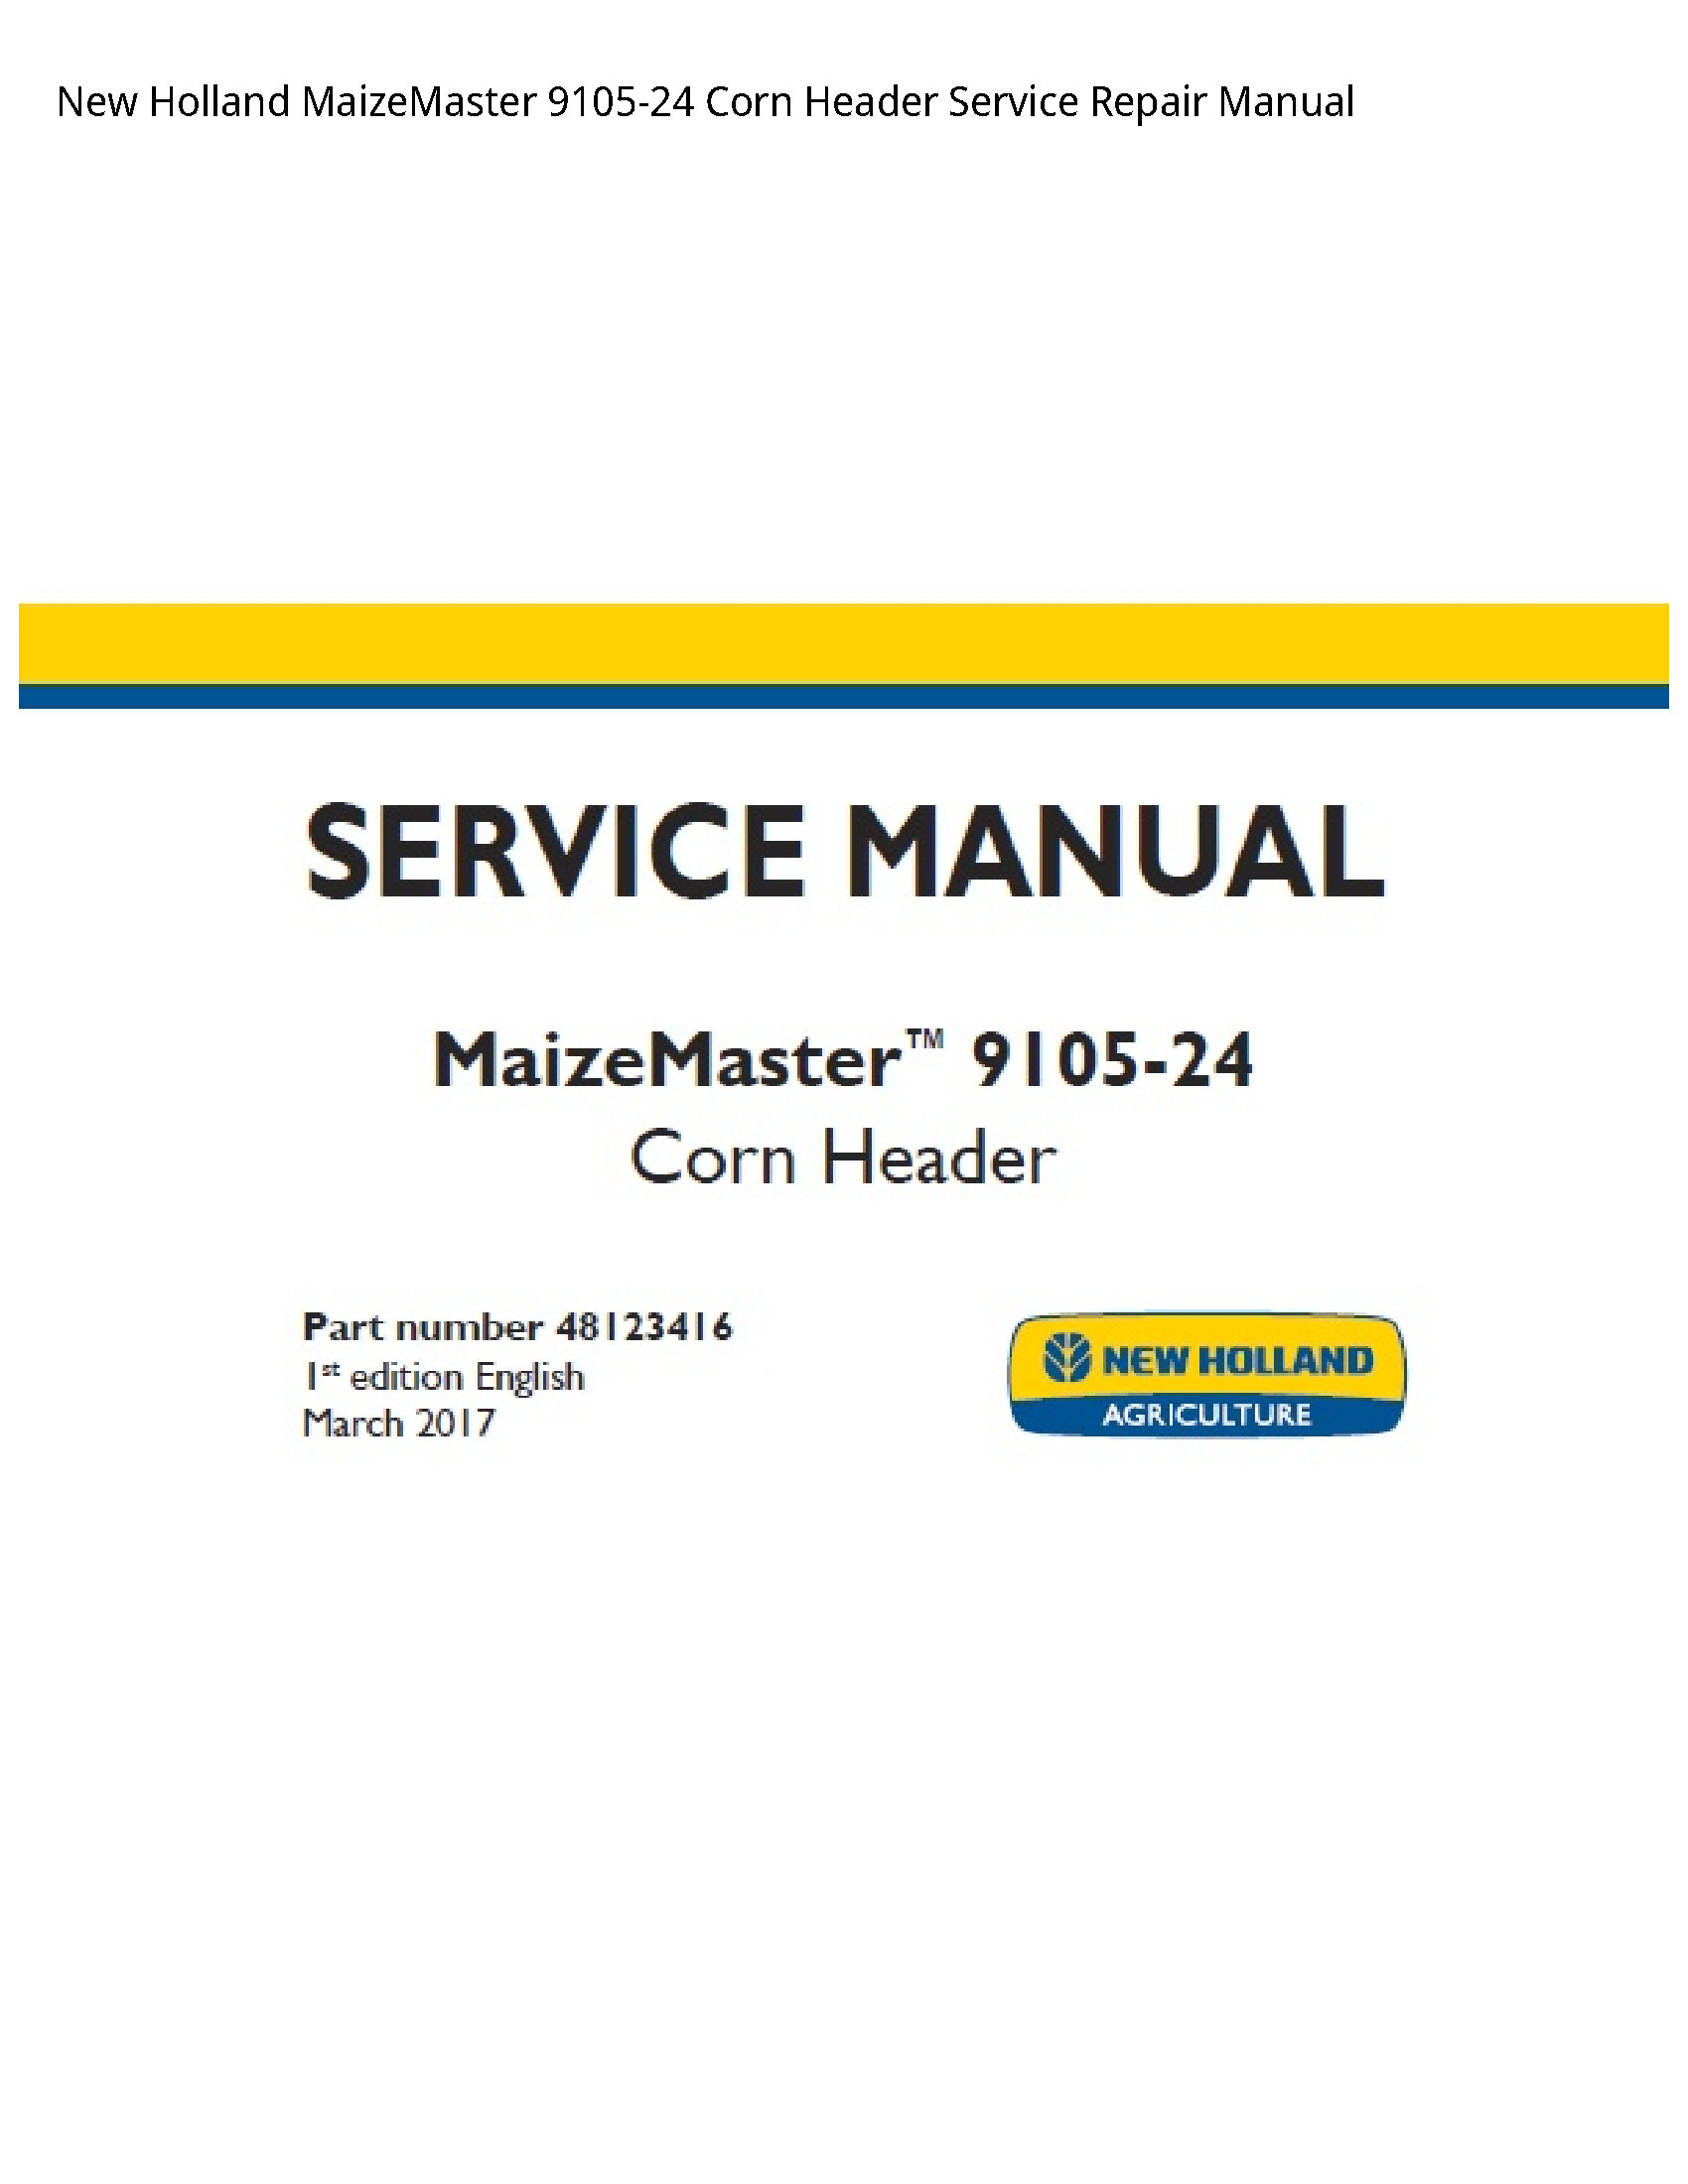 New Holland 9105-24 MaizeMaster Corn Header manual